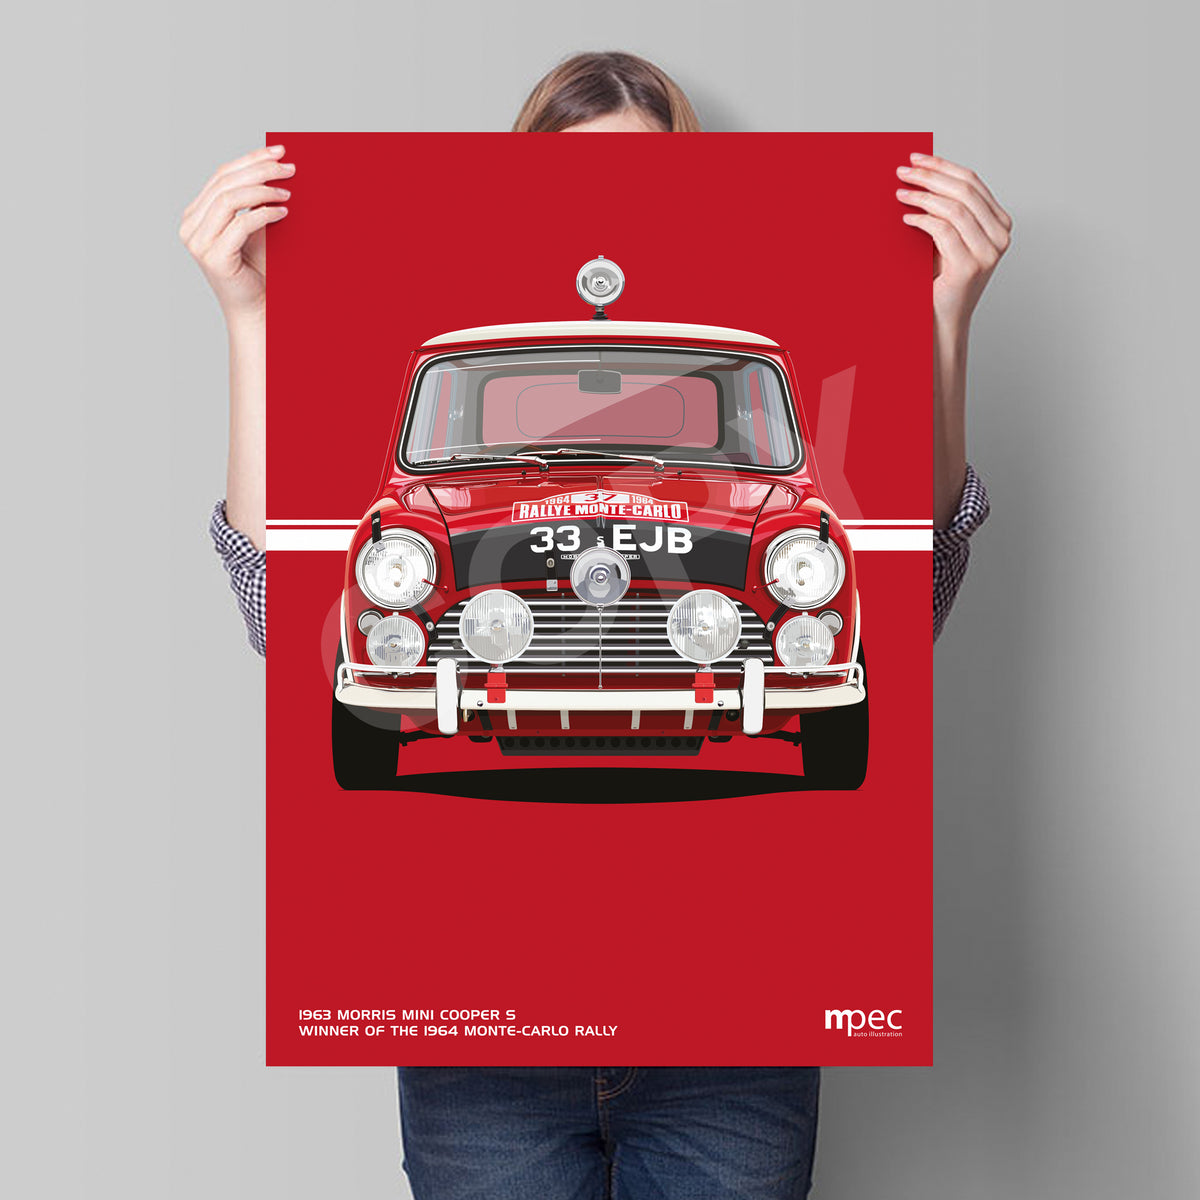 Illustration 1963 Morris Mini Cooper S 1964 Monte-Carlo Rally Winner